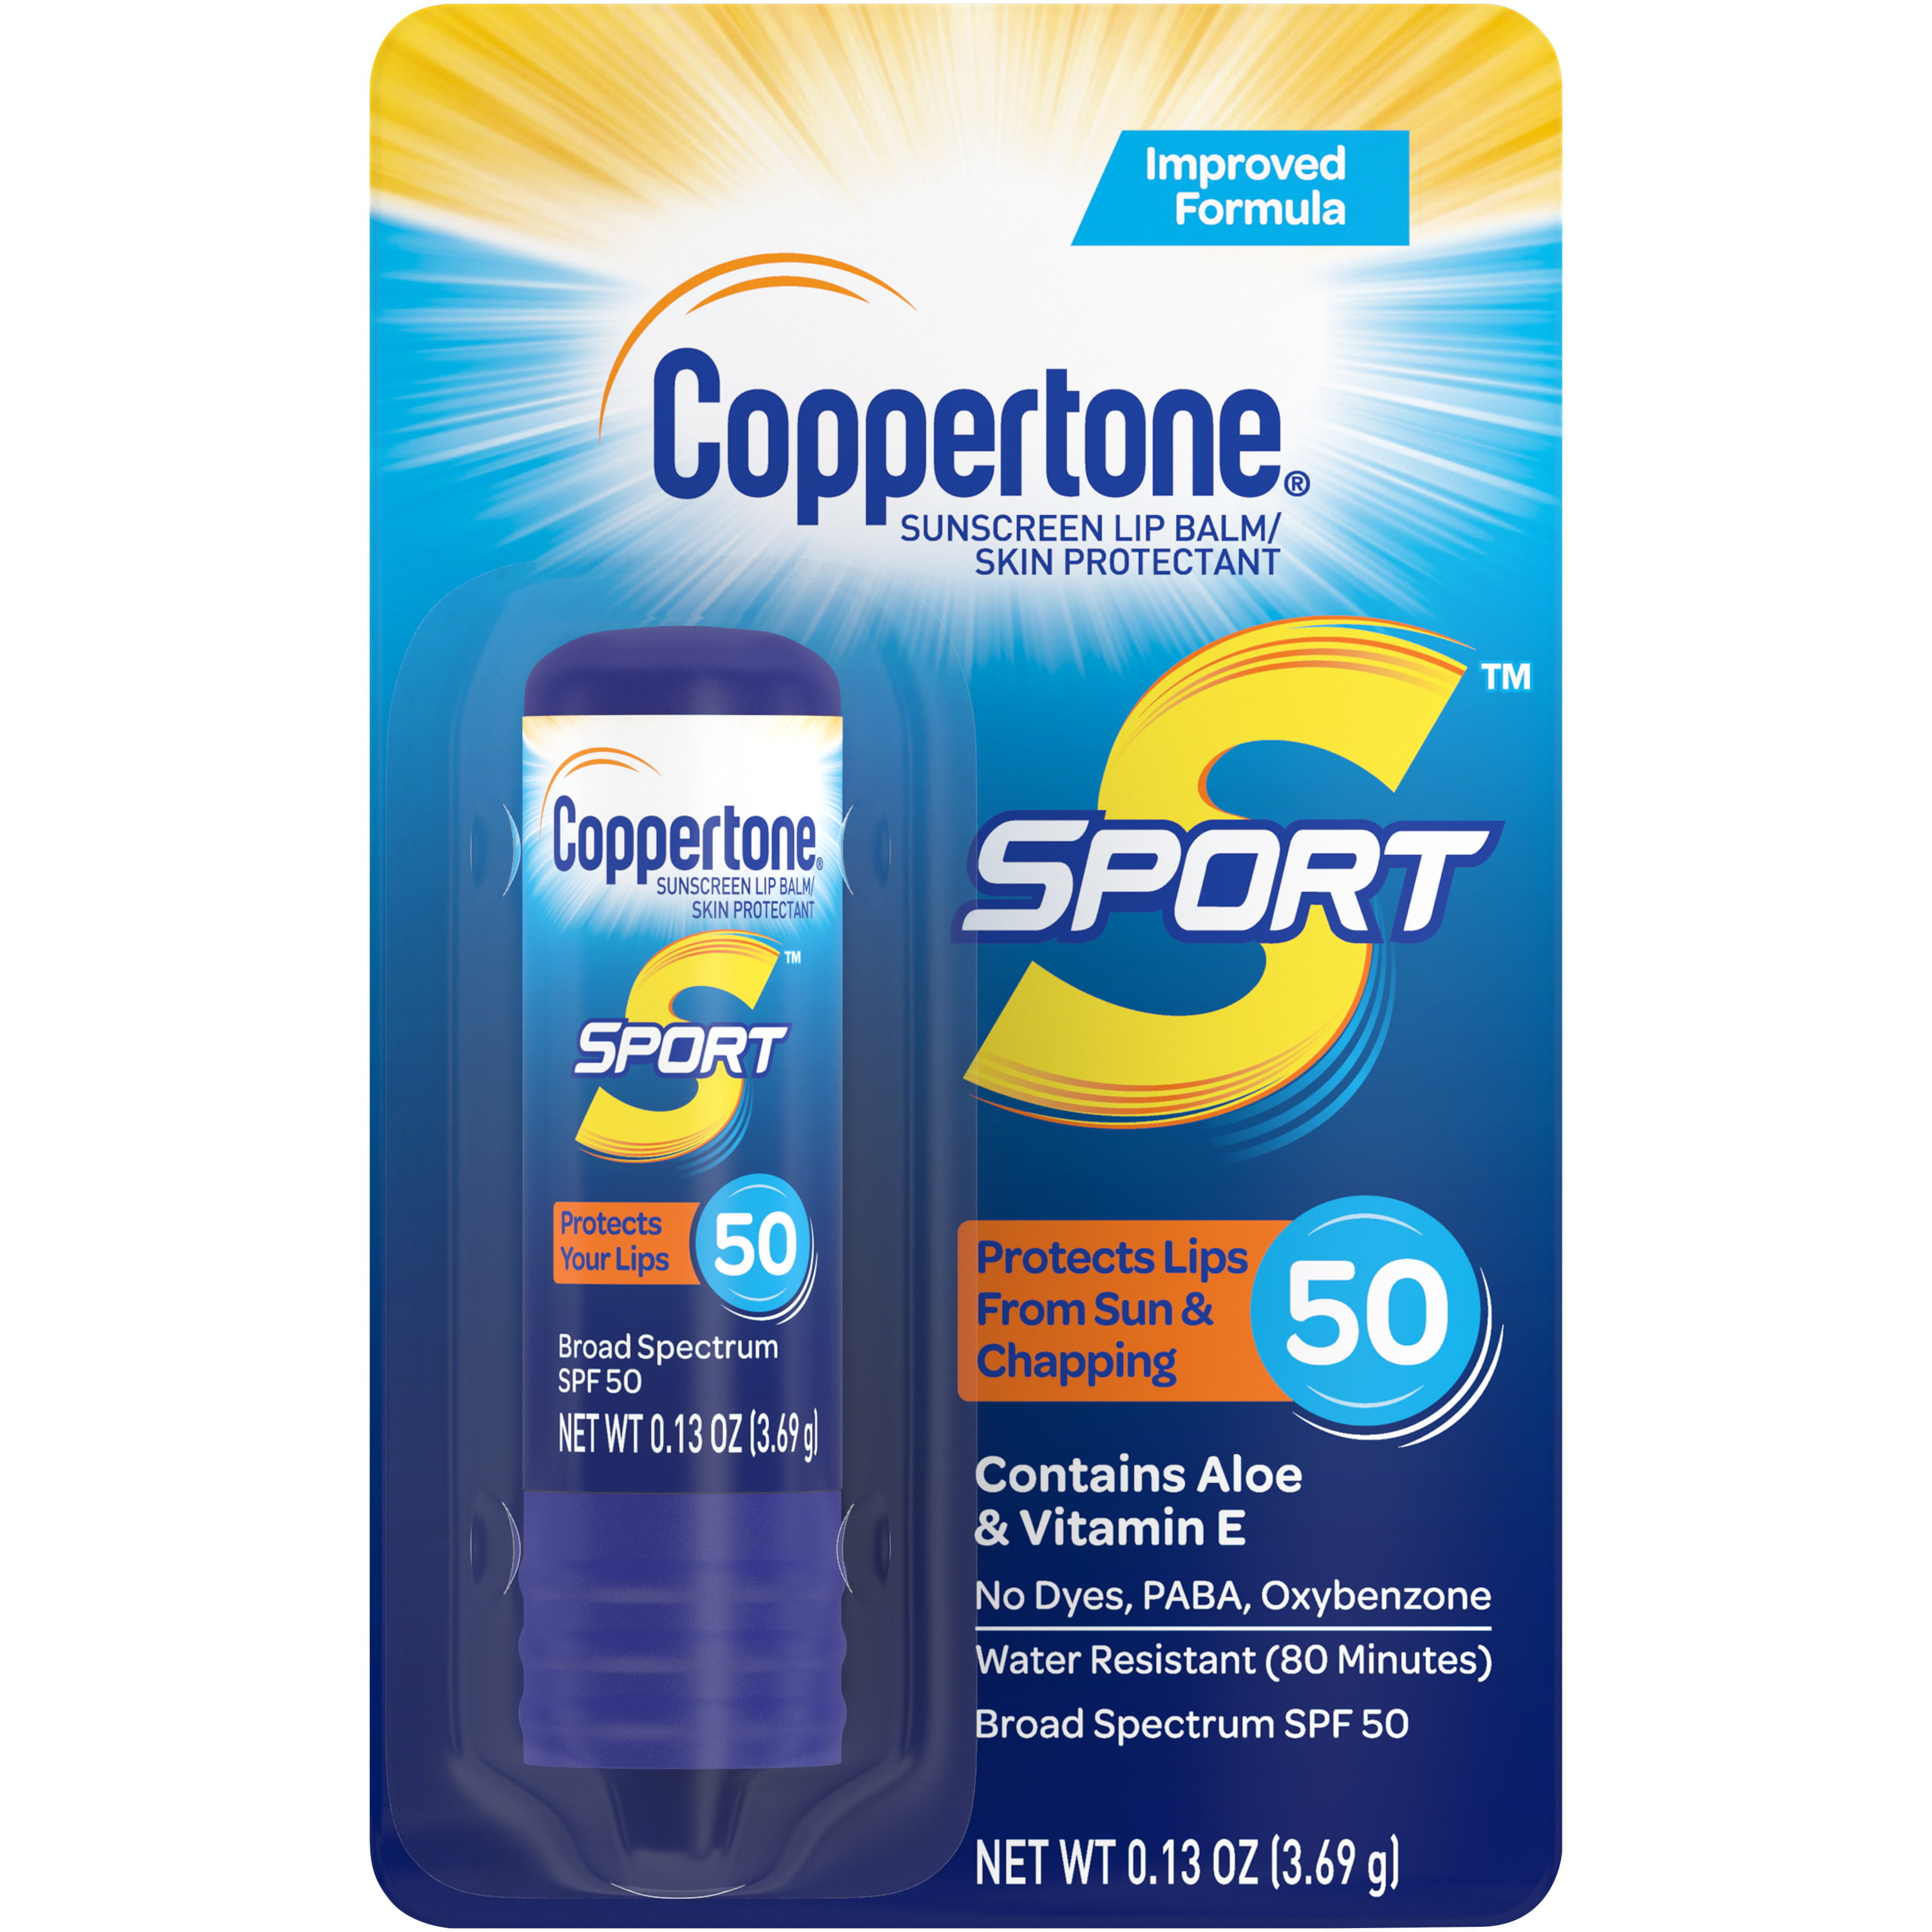 Coppertone Sport Sunscreen Lip Broad Spectrum Spf 50 13 Oz Walmart Com Walmart Com